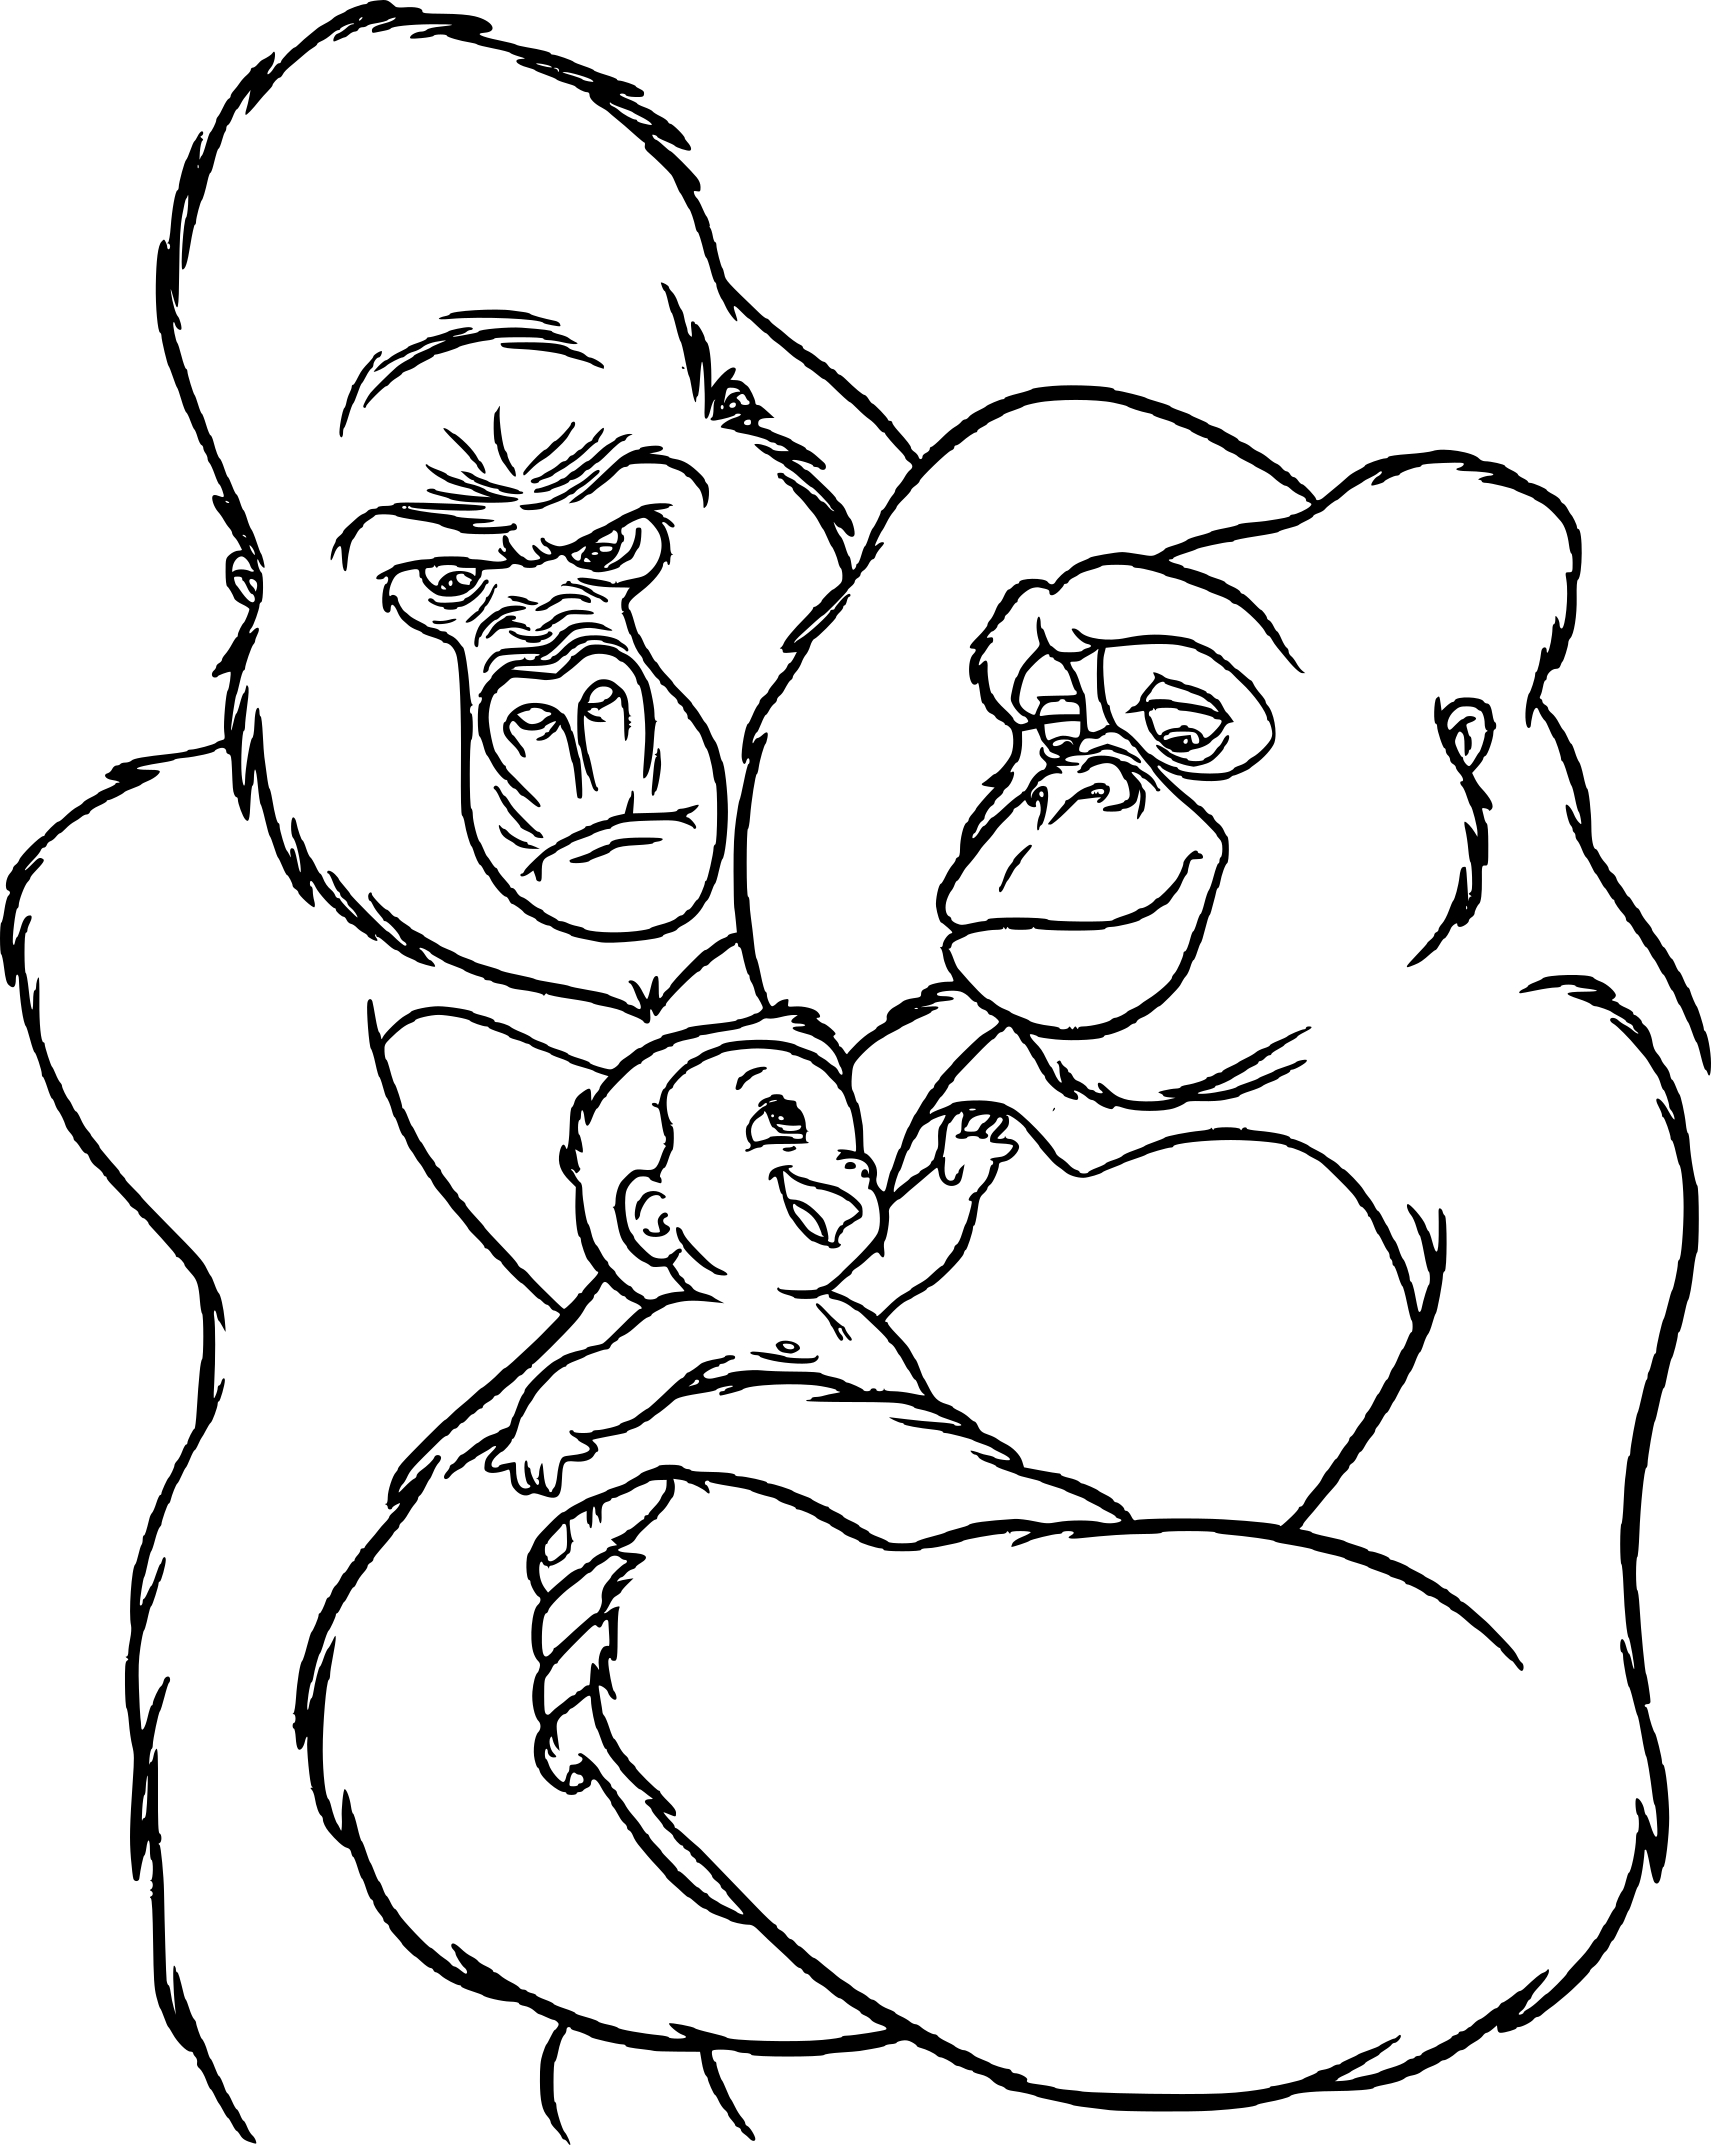 Tarzan And His Family coloring page